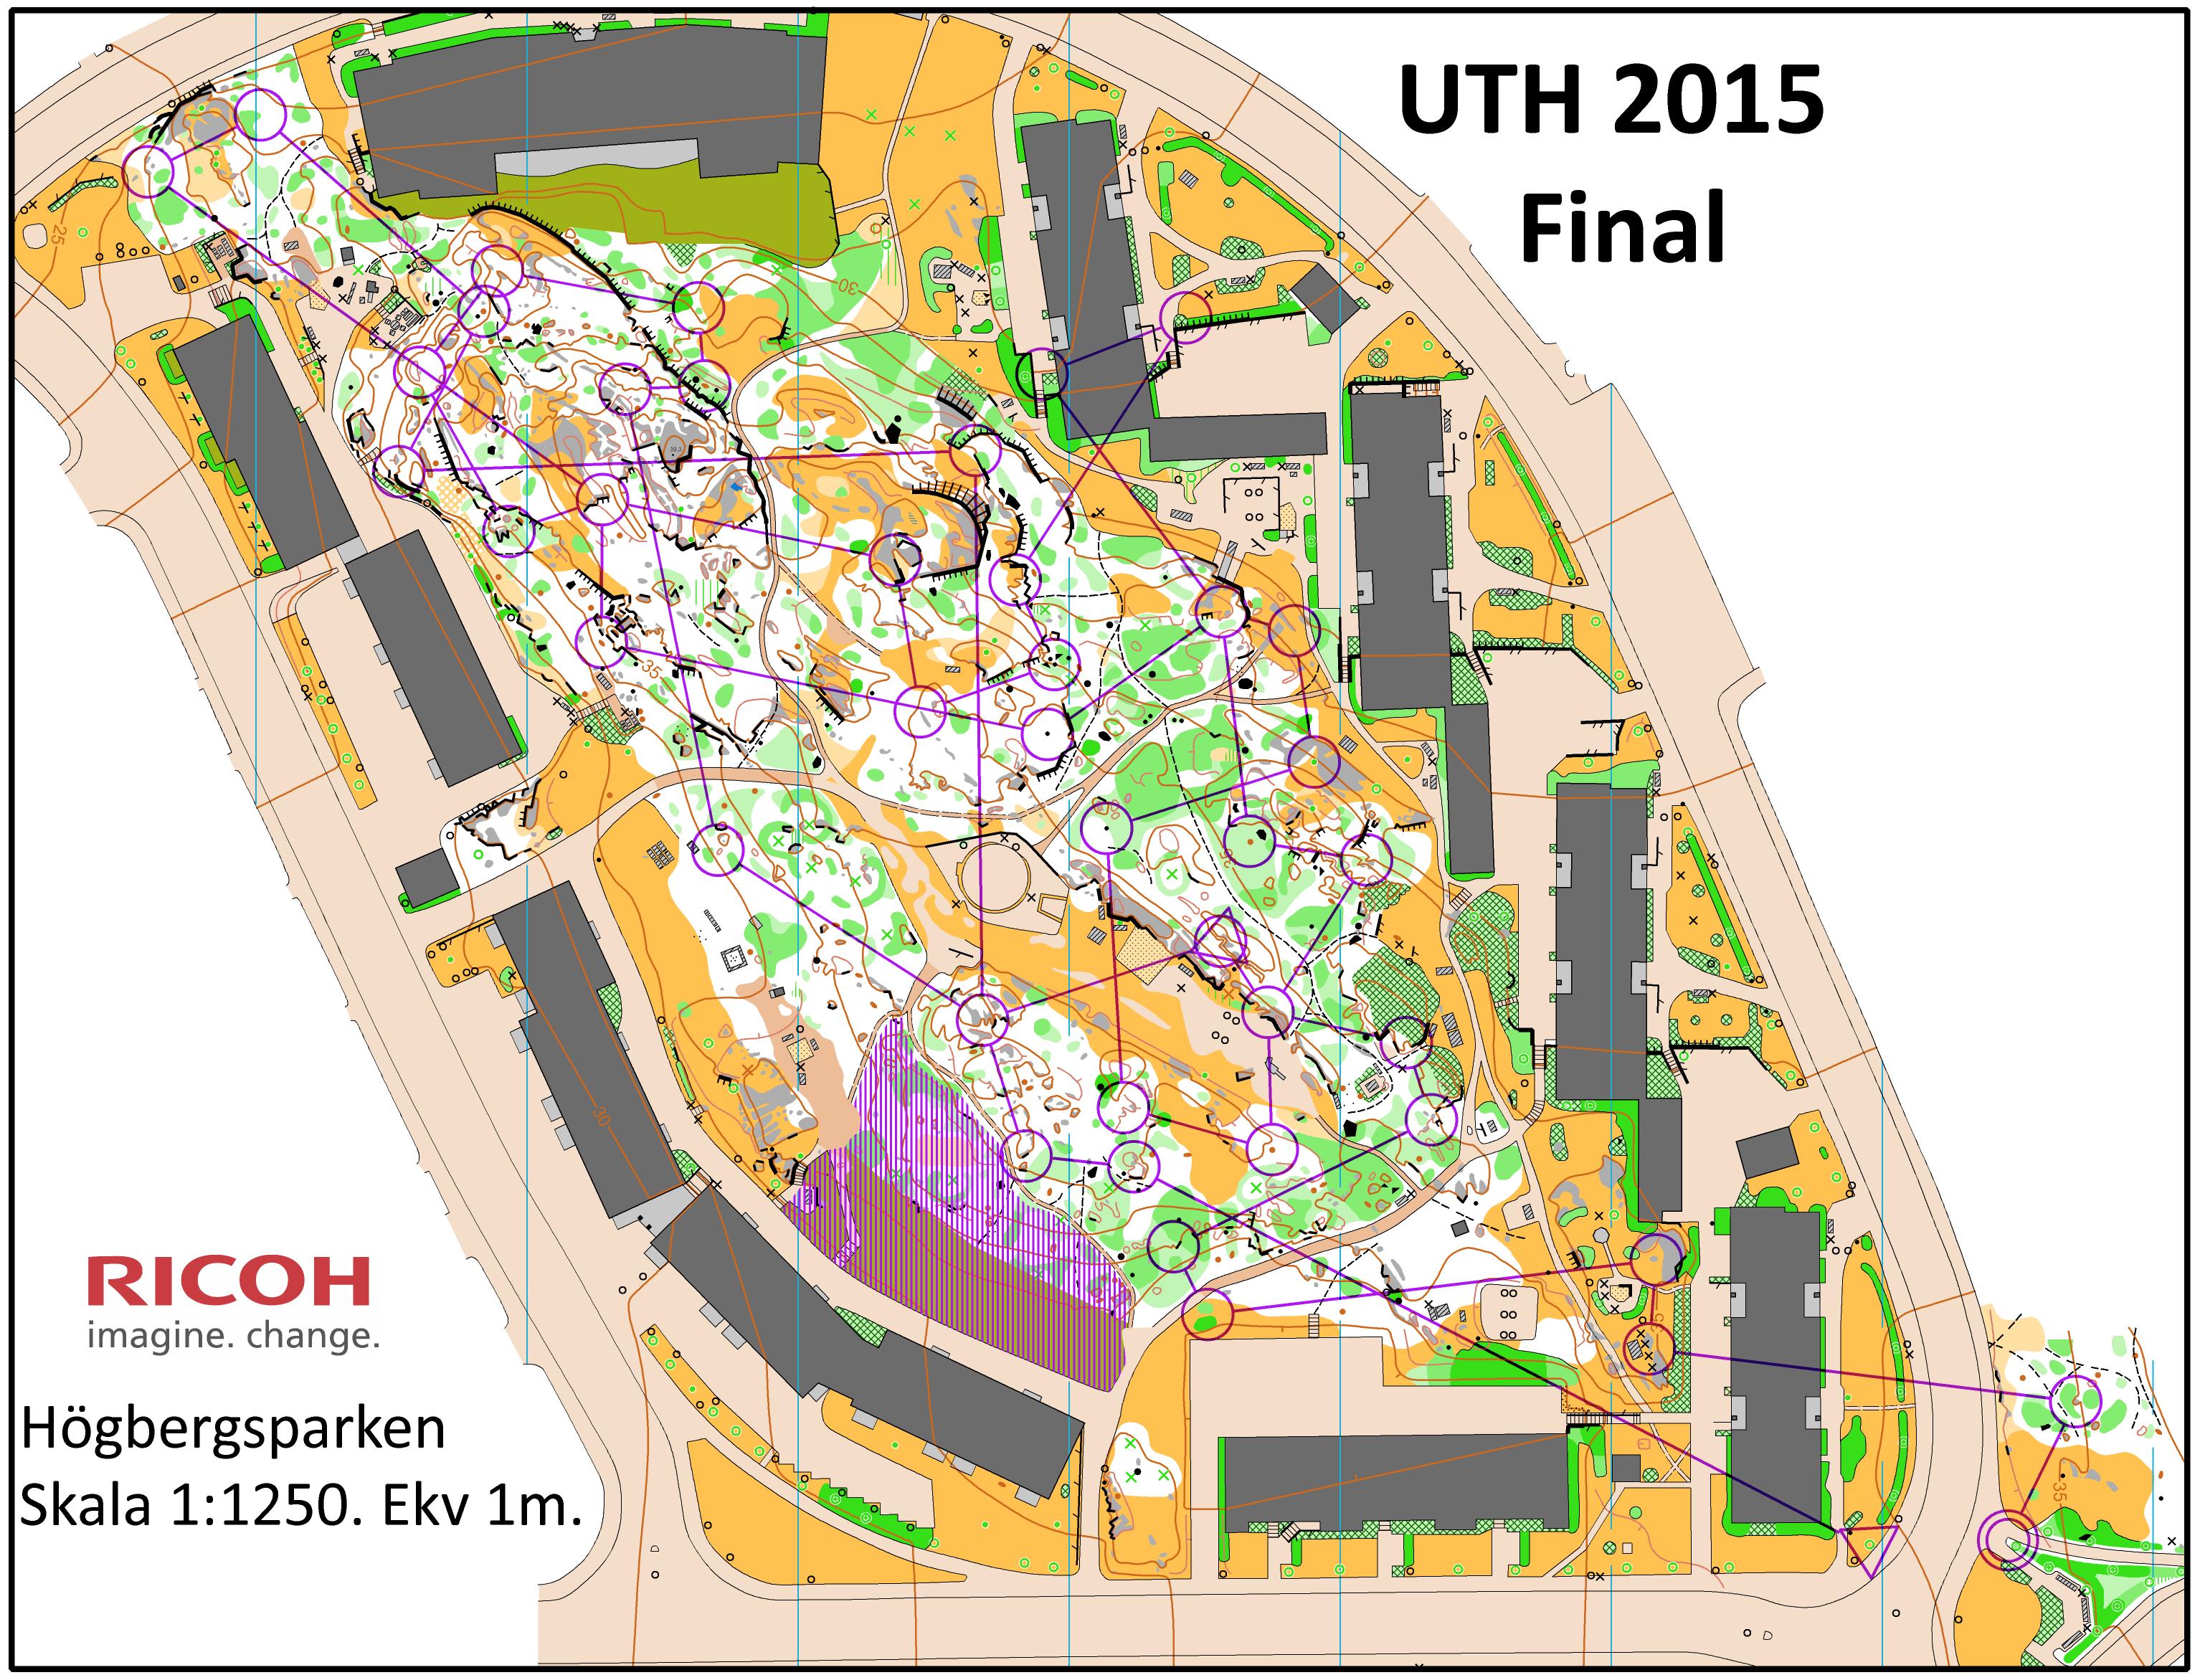 UTH15 - Ultrasprint (06.12.2015)